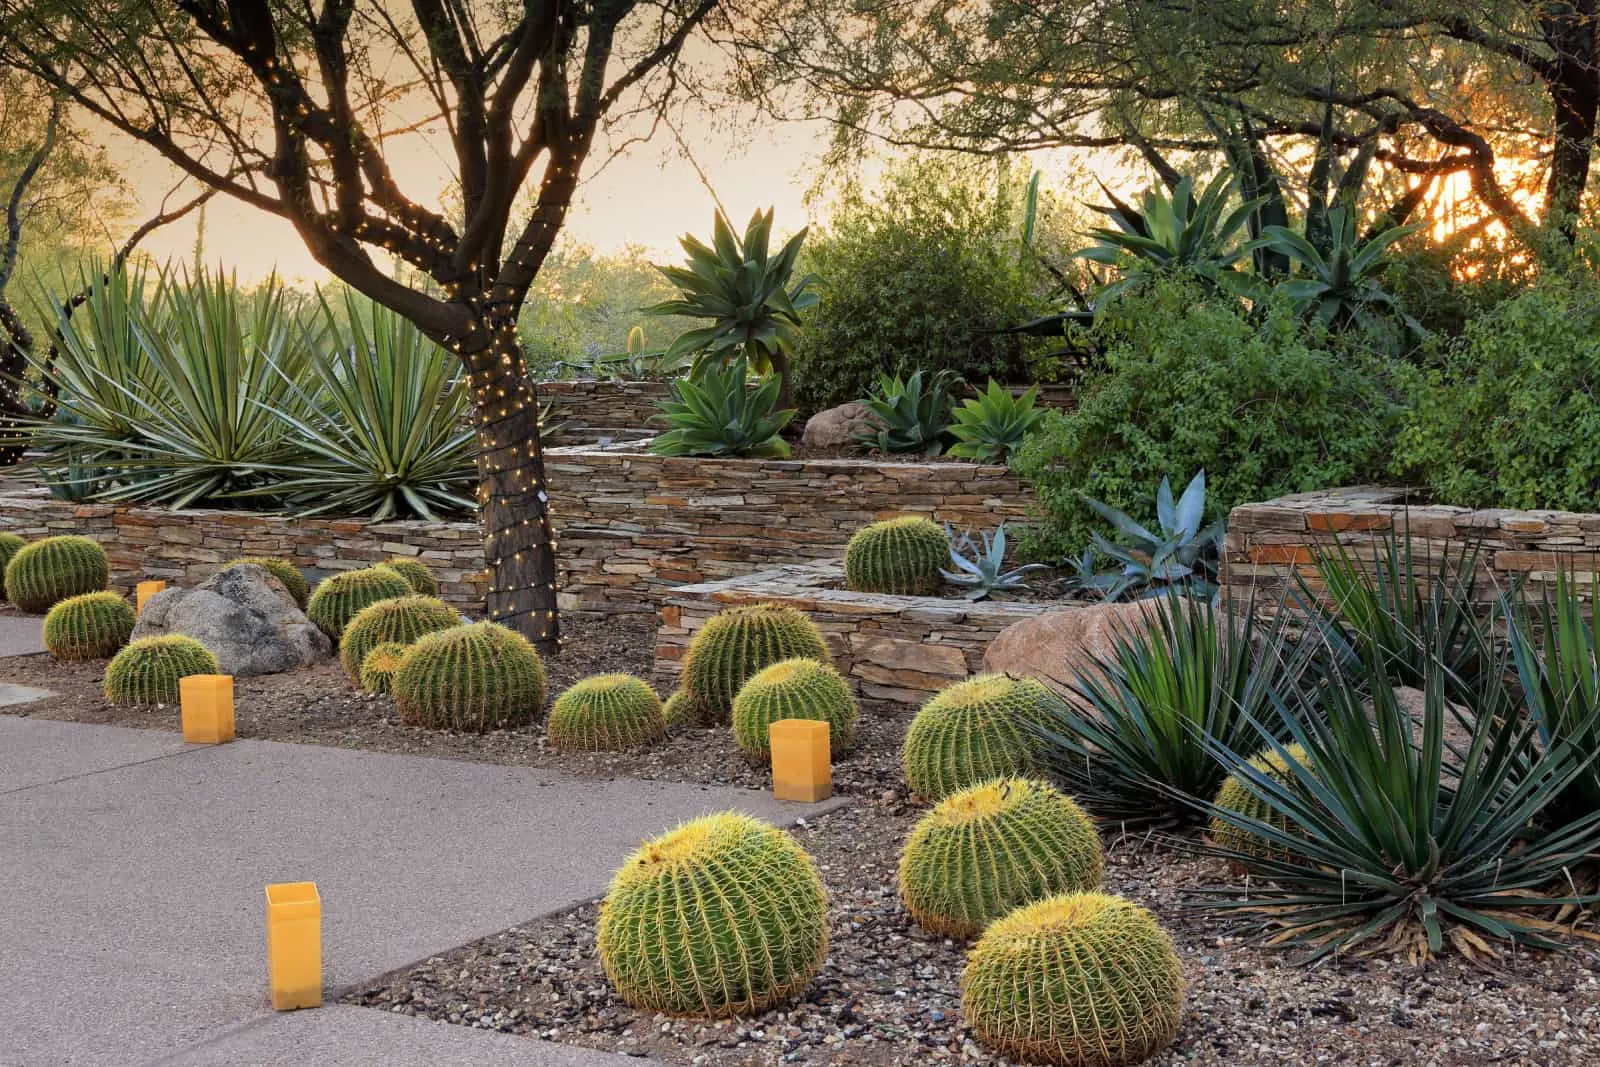 A cactus garden after sunset